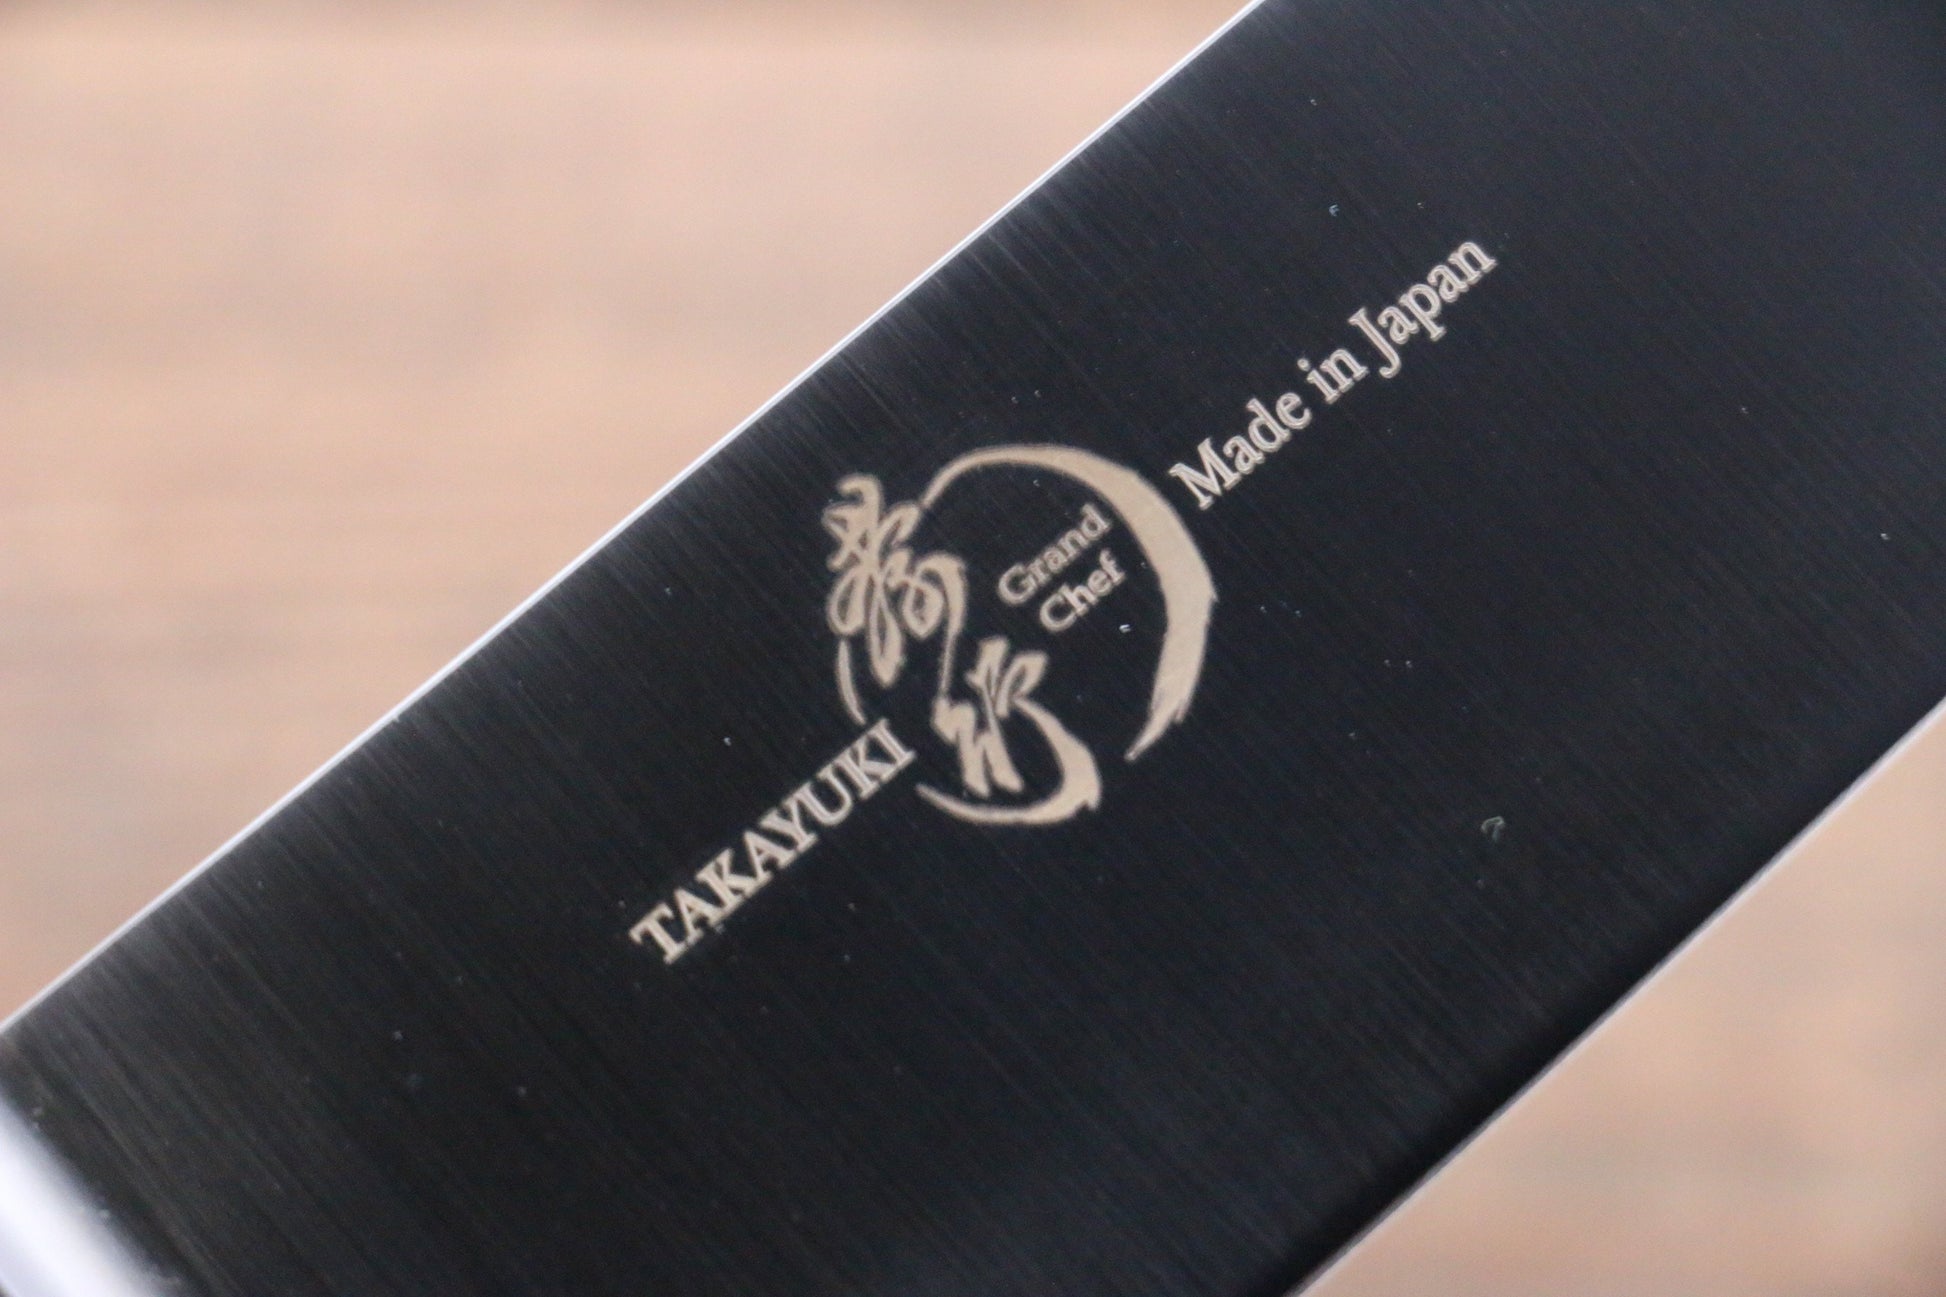 Sakai Takayuki Sakai Takayuki  Grand Chef Swedish Steel Santoku Japanese Knife 180mm with Black Micarta Handle - Japanny - Best Japanese Knife